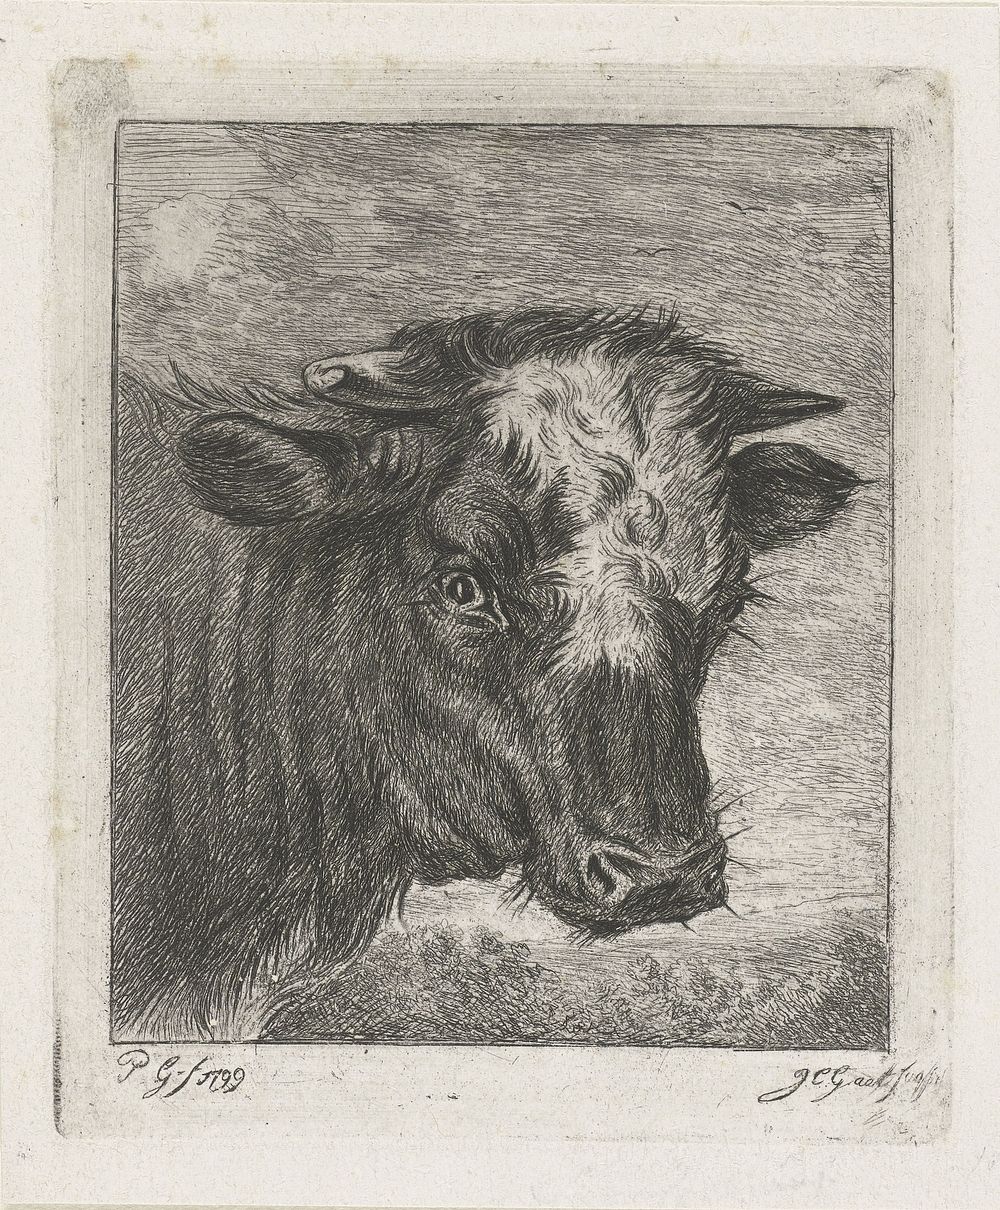 Kop van een koe met witte kol (c. 1850 - c. 1852) by Jacobus Cornelis Gaal and Pieter Gaal